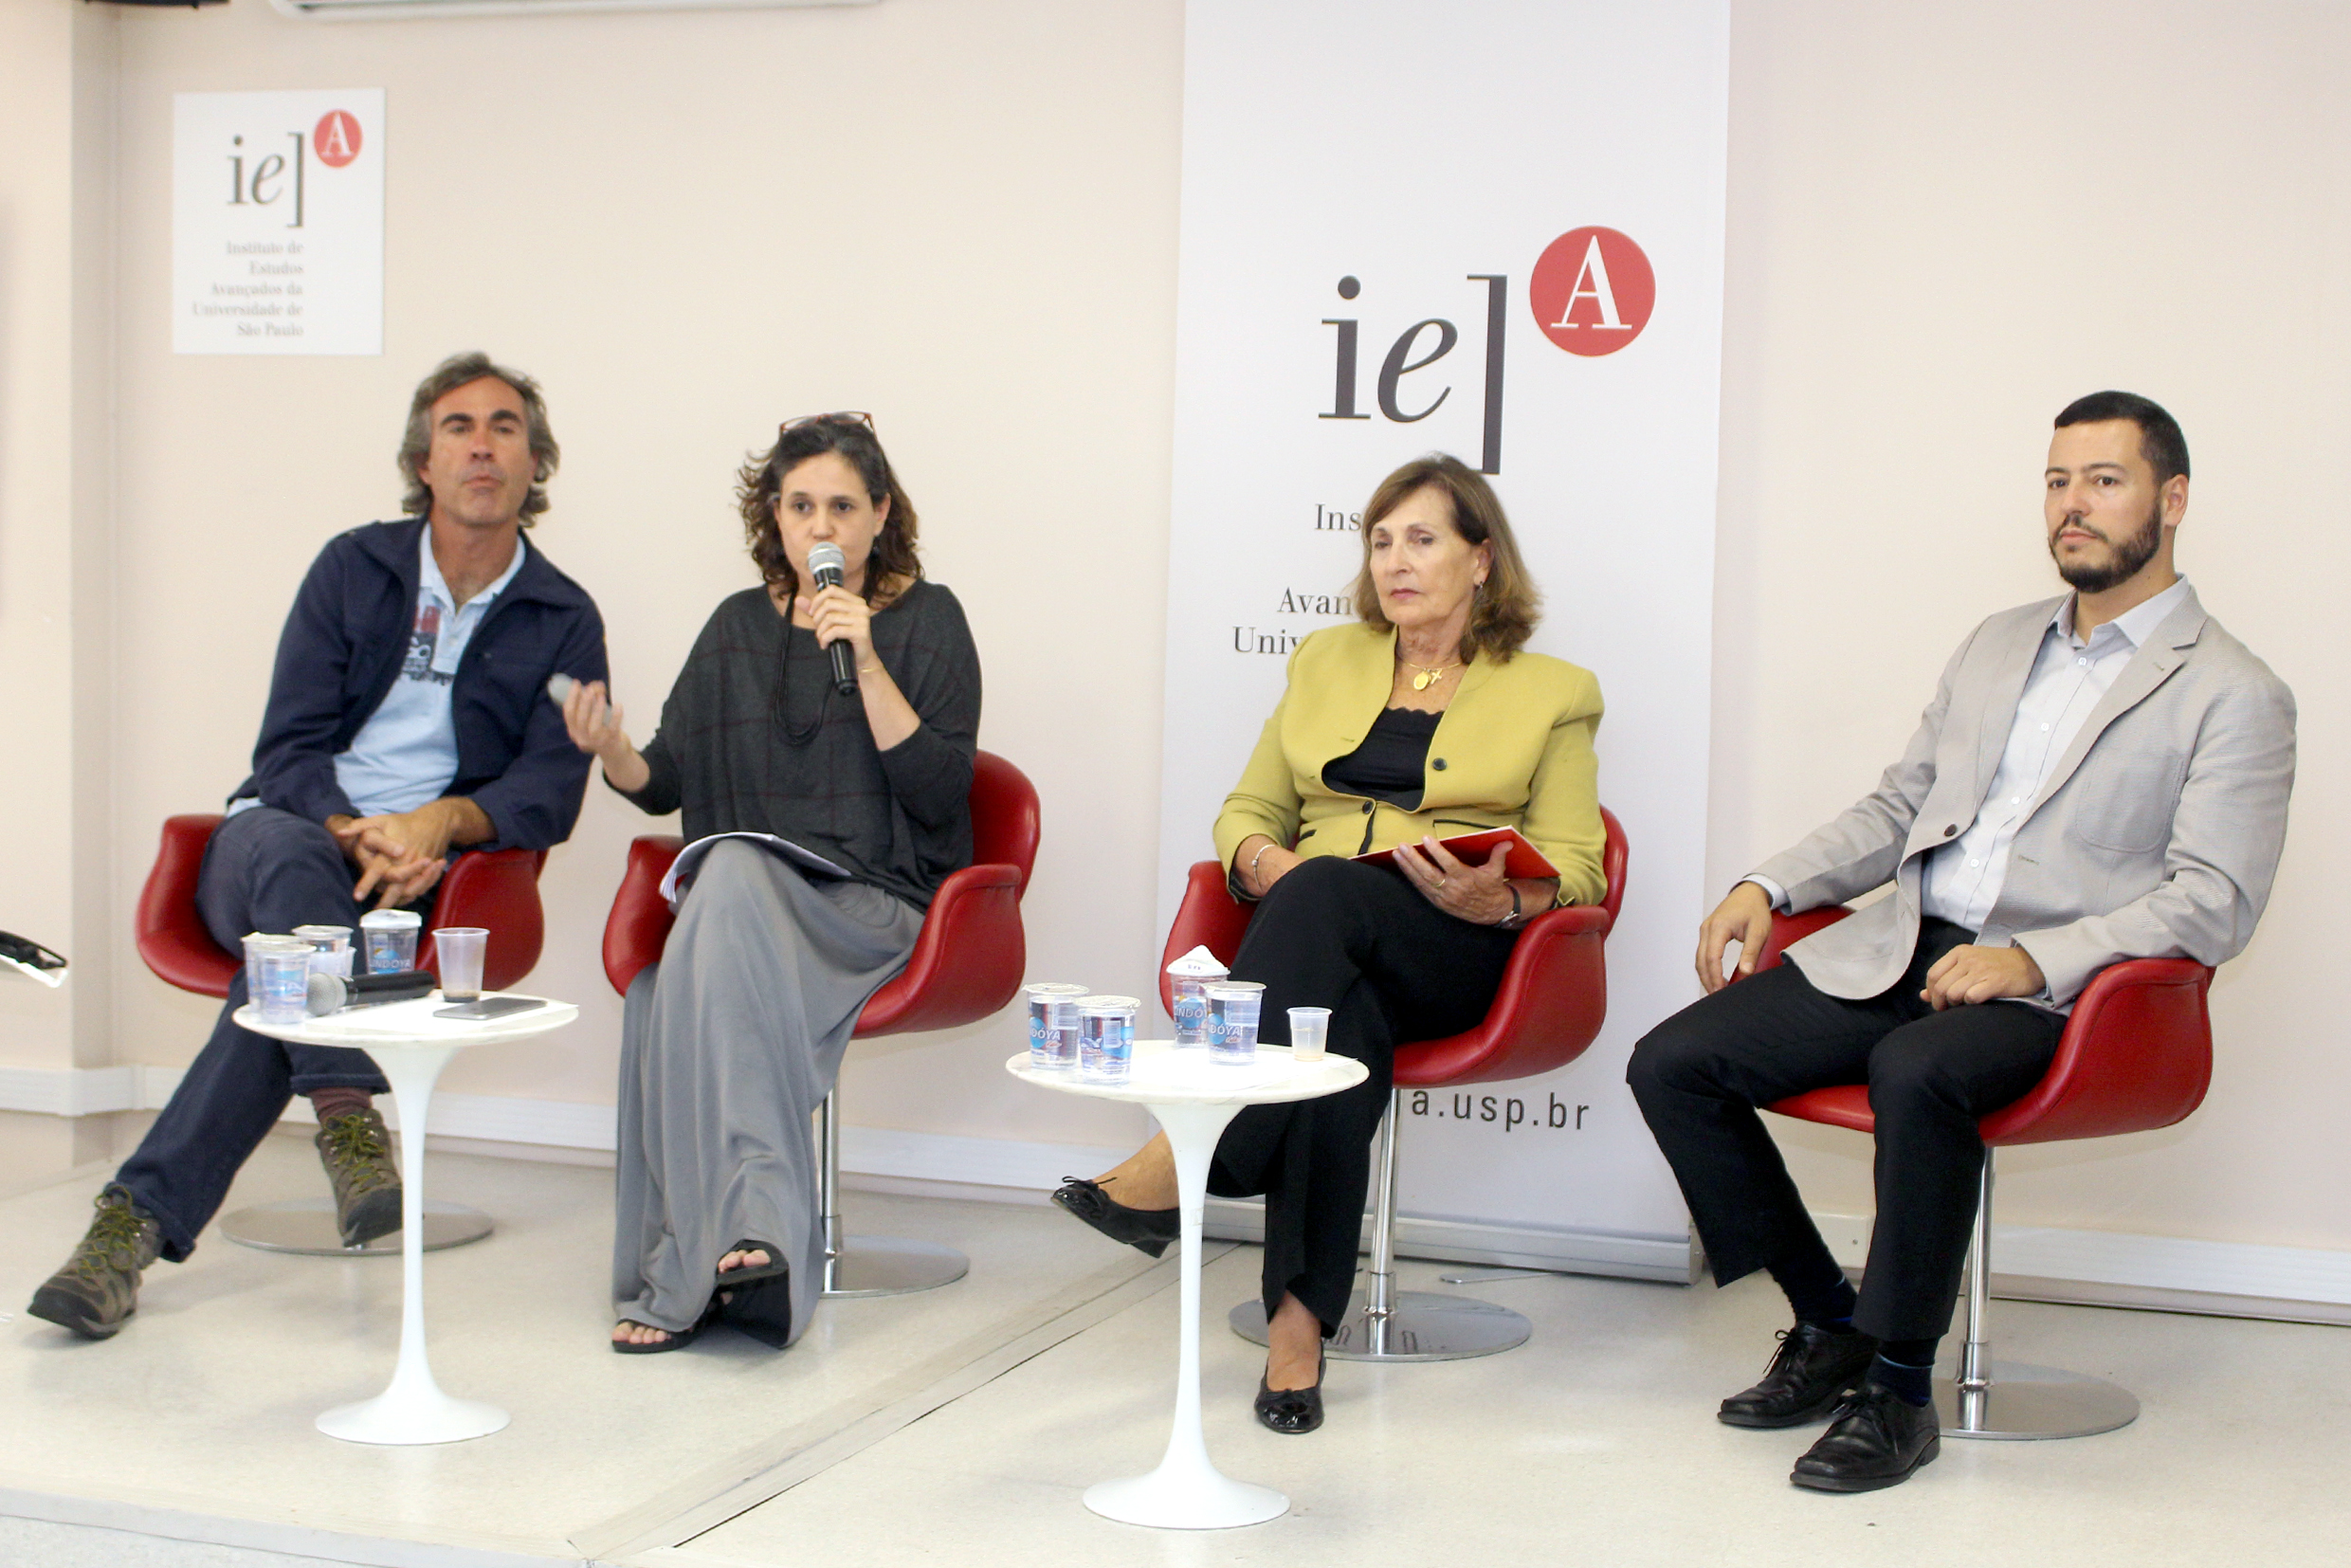 Bruno Paes Manso, Maria Fernanda T. Peres, Helena Ribeiro e Sérgio Cristancho Marulanda